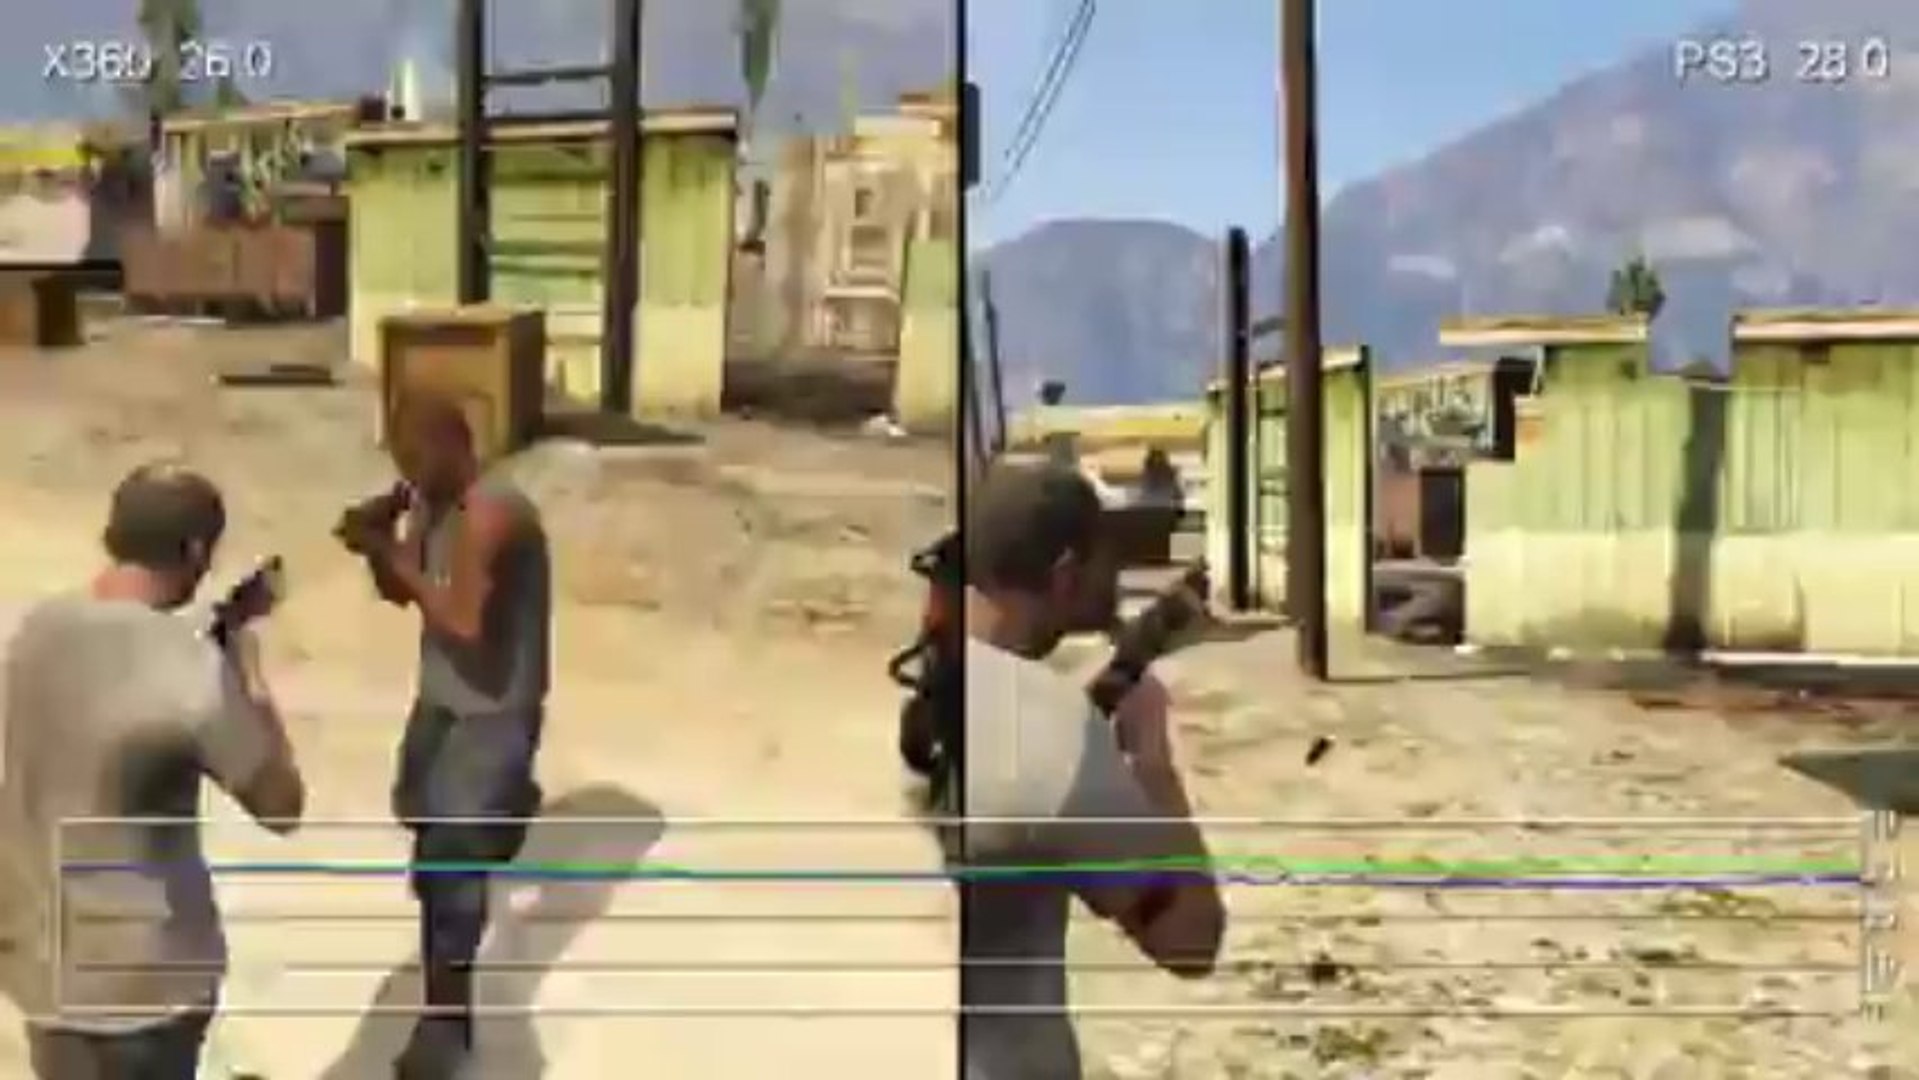 GTAV Graphics Duel: Xbox 360 vs. PS4 - Grand Theft Auto V - Gamereactor